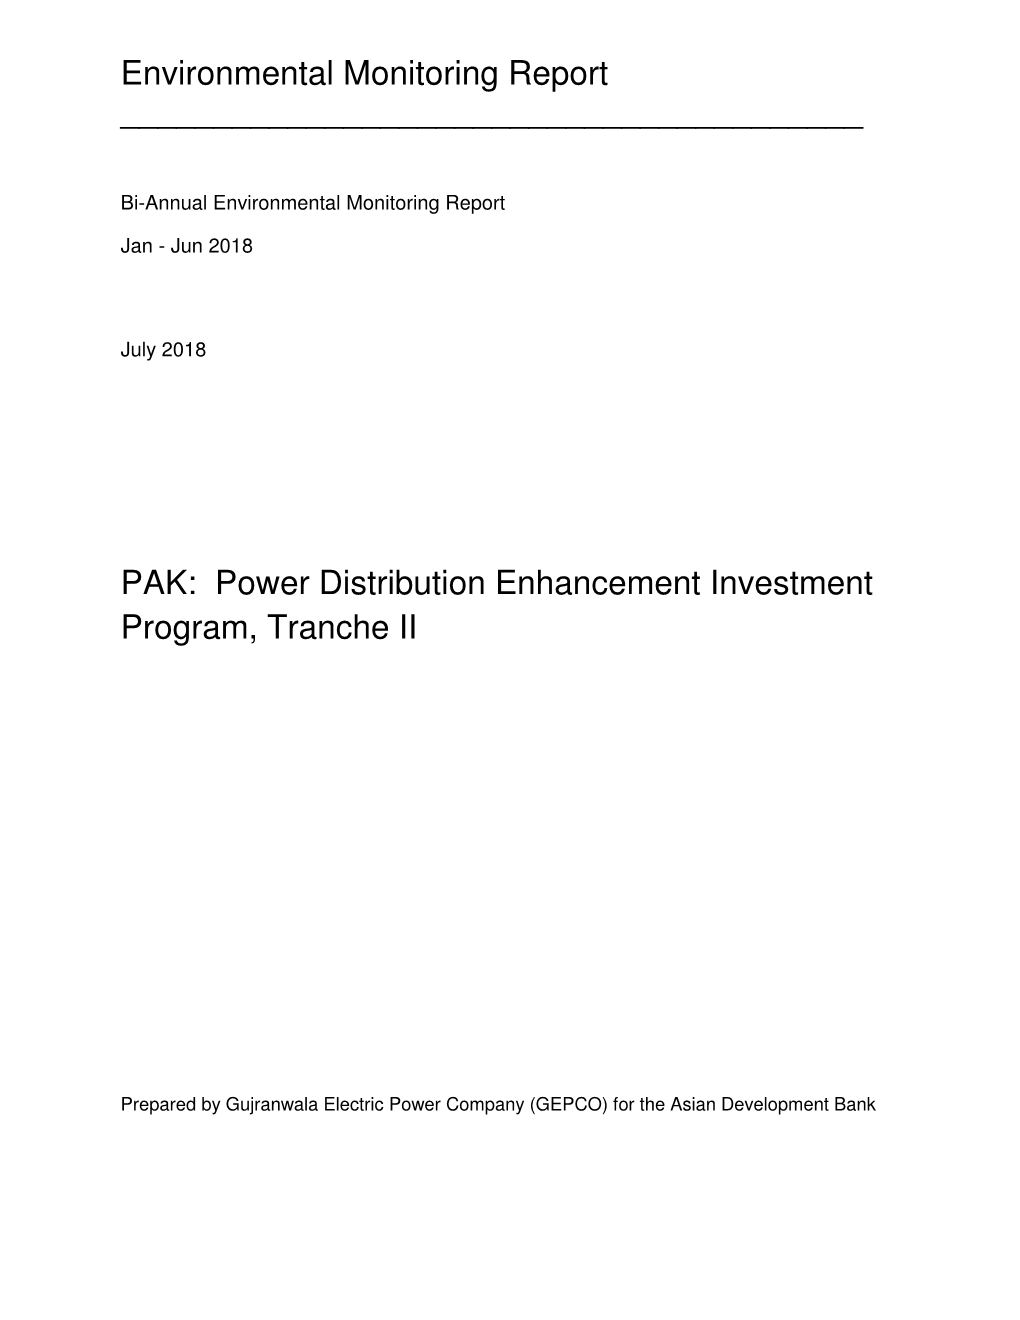 38456-033: Power Distribution Enhancement Investment Program